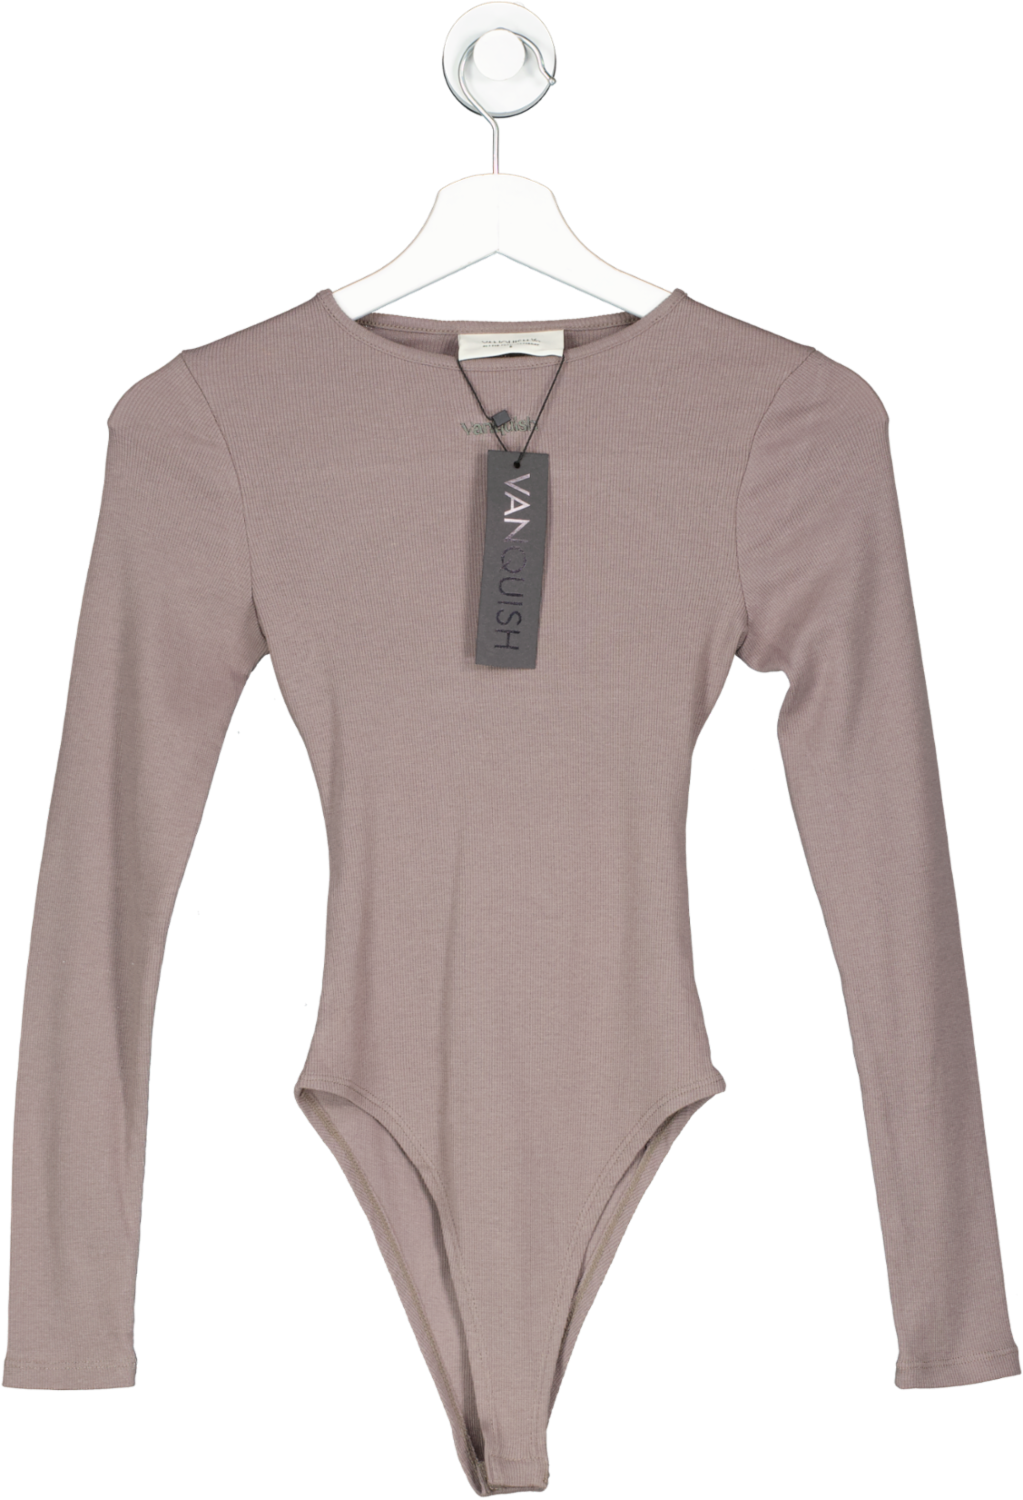 Vanquish Restore Cinder Brown Long Sleeve Ribbed Bodysuit UK S